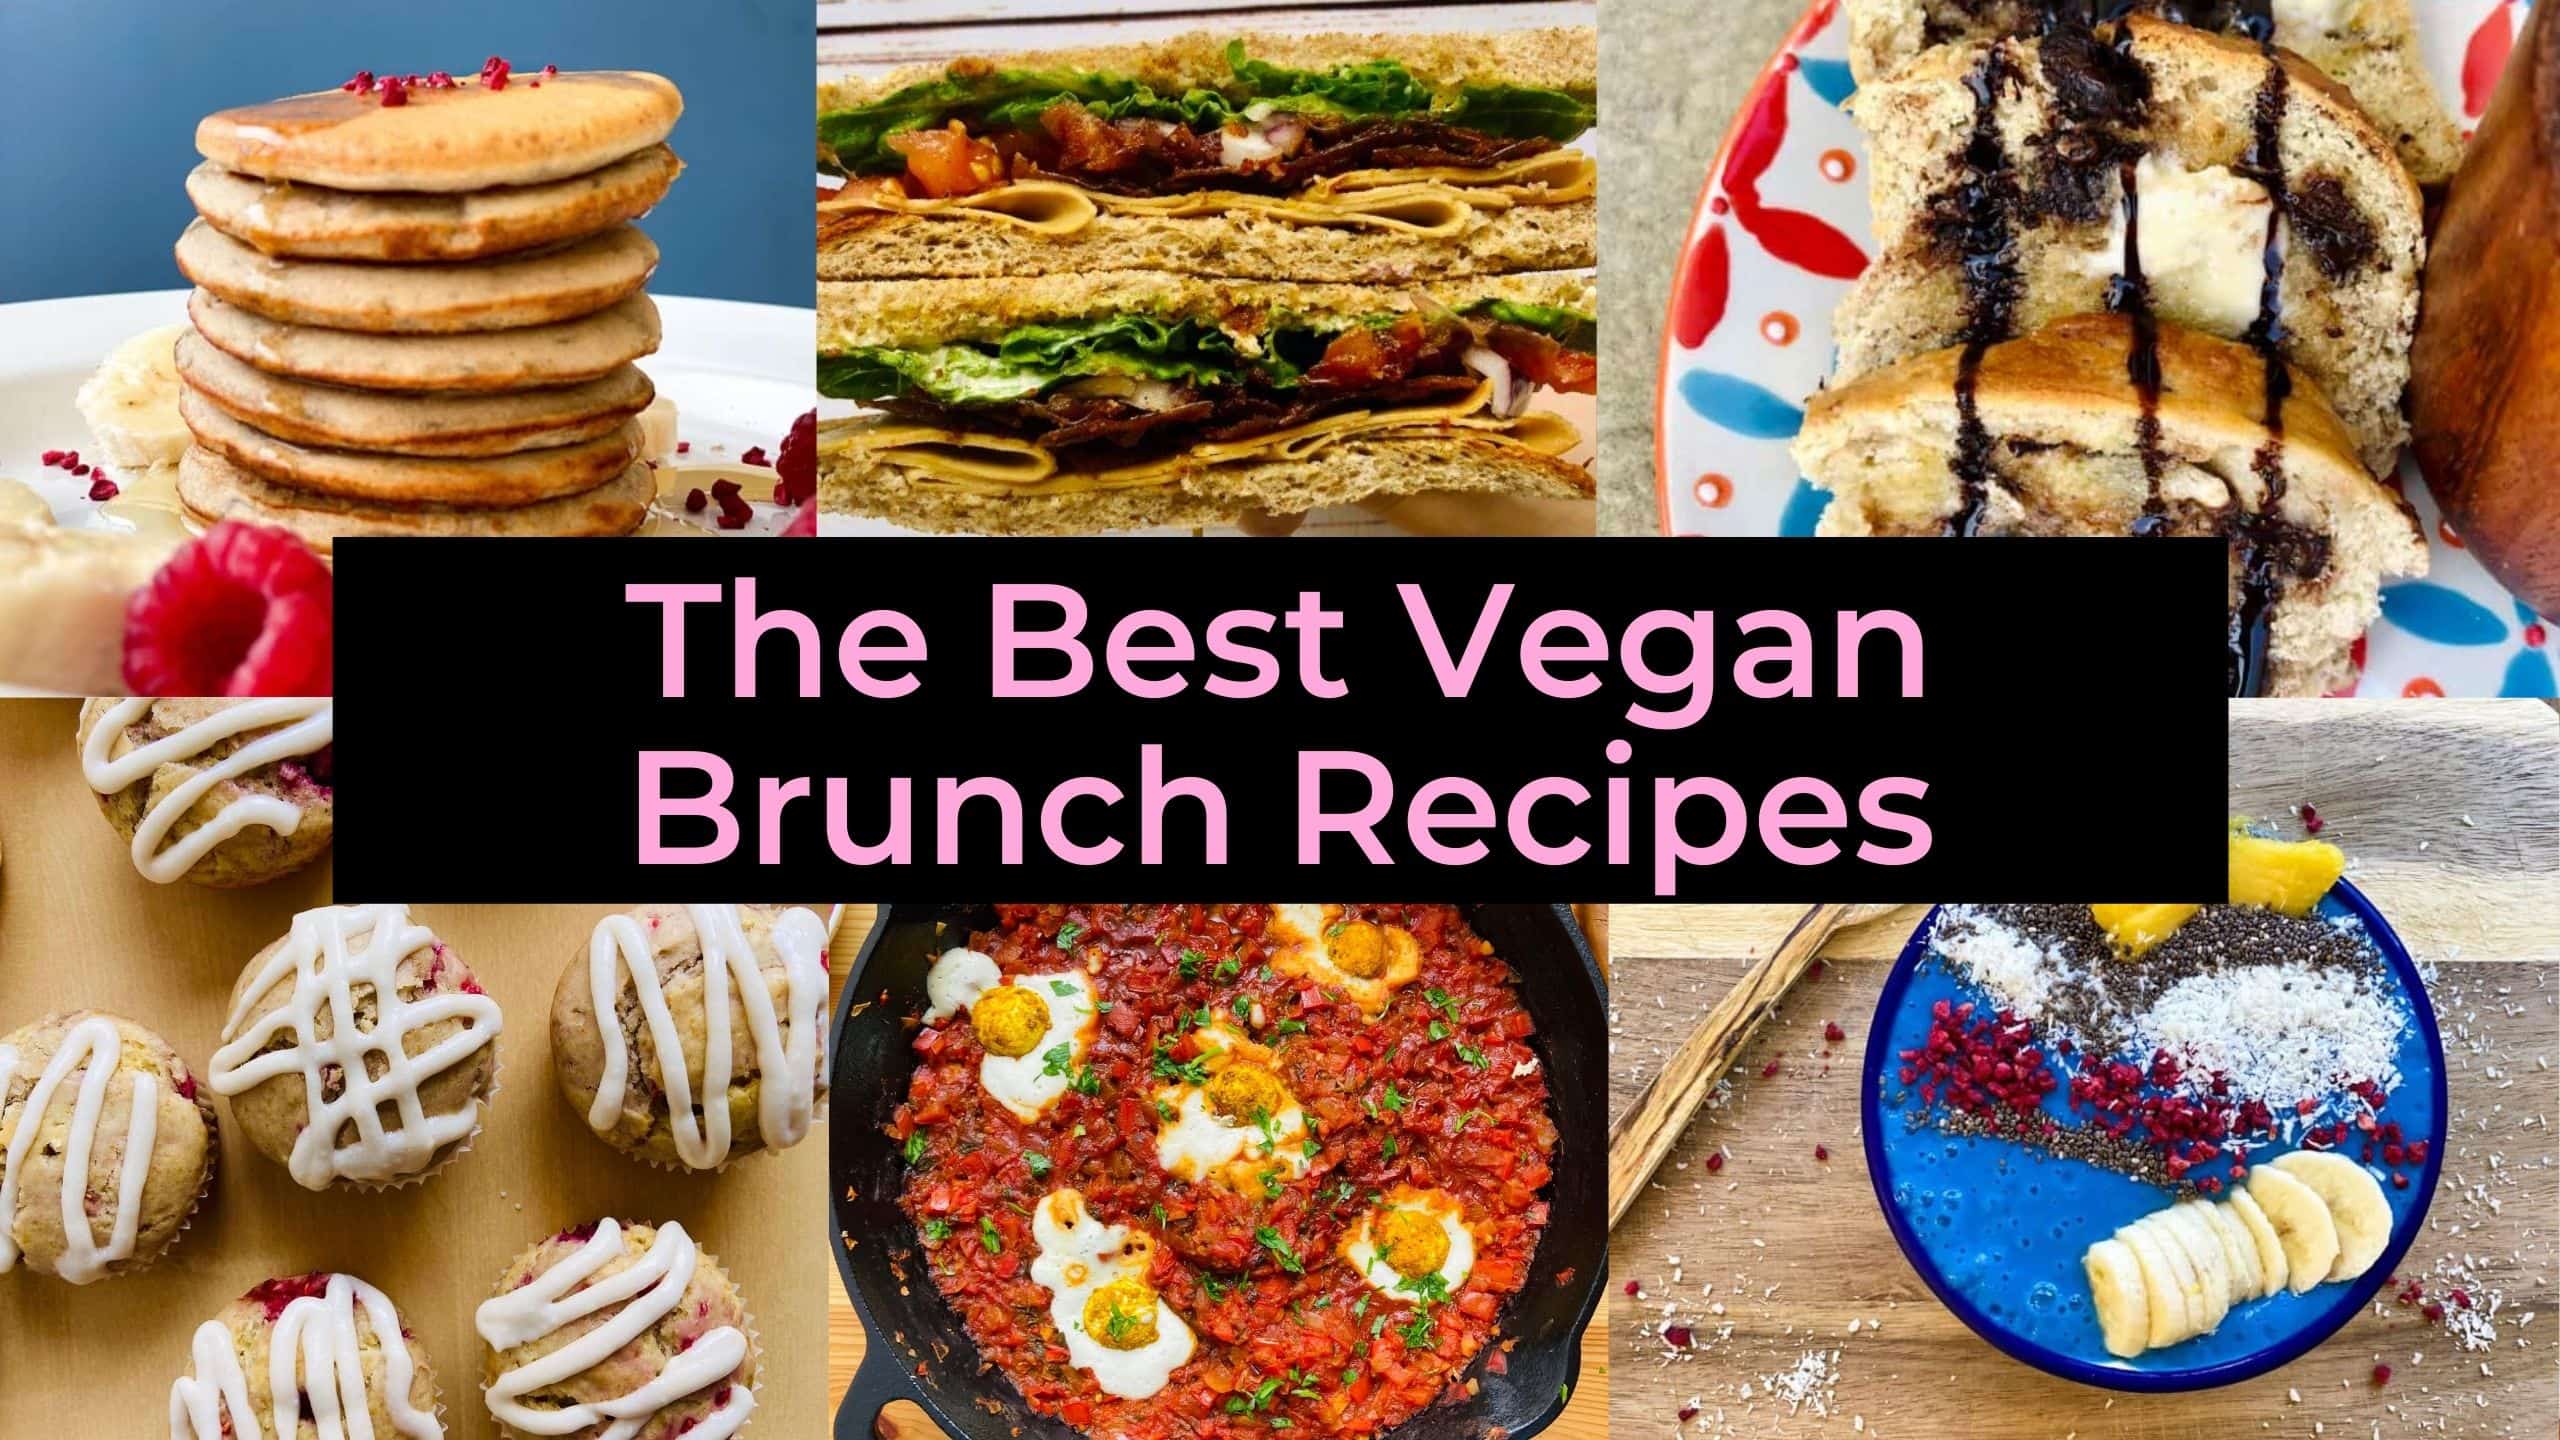 The best vegan brunch recipes